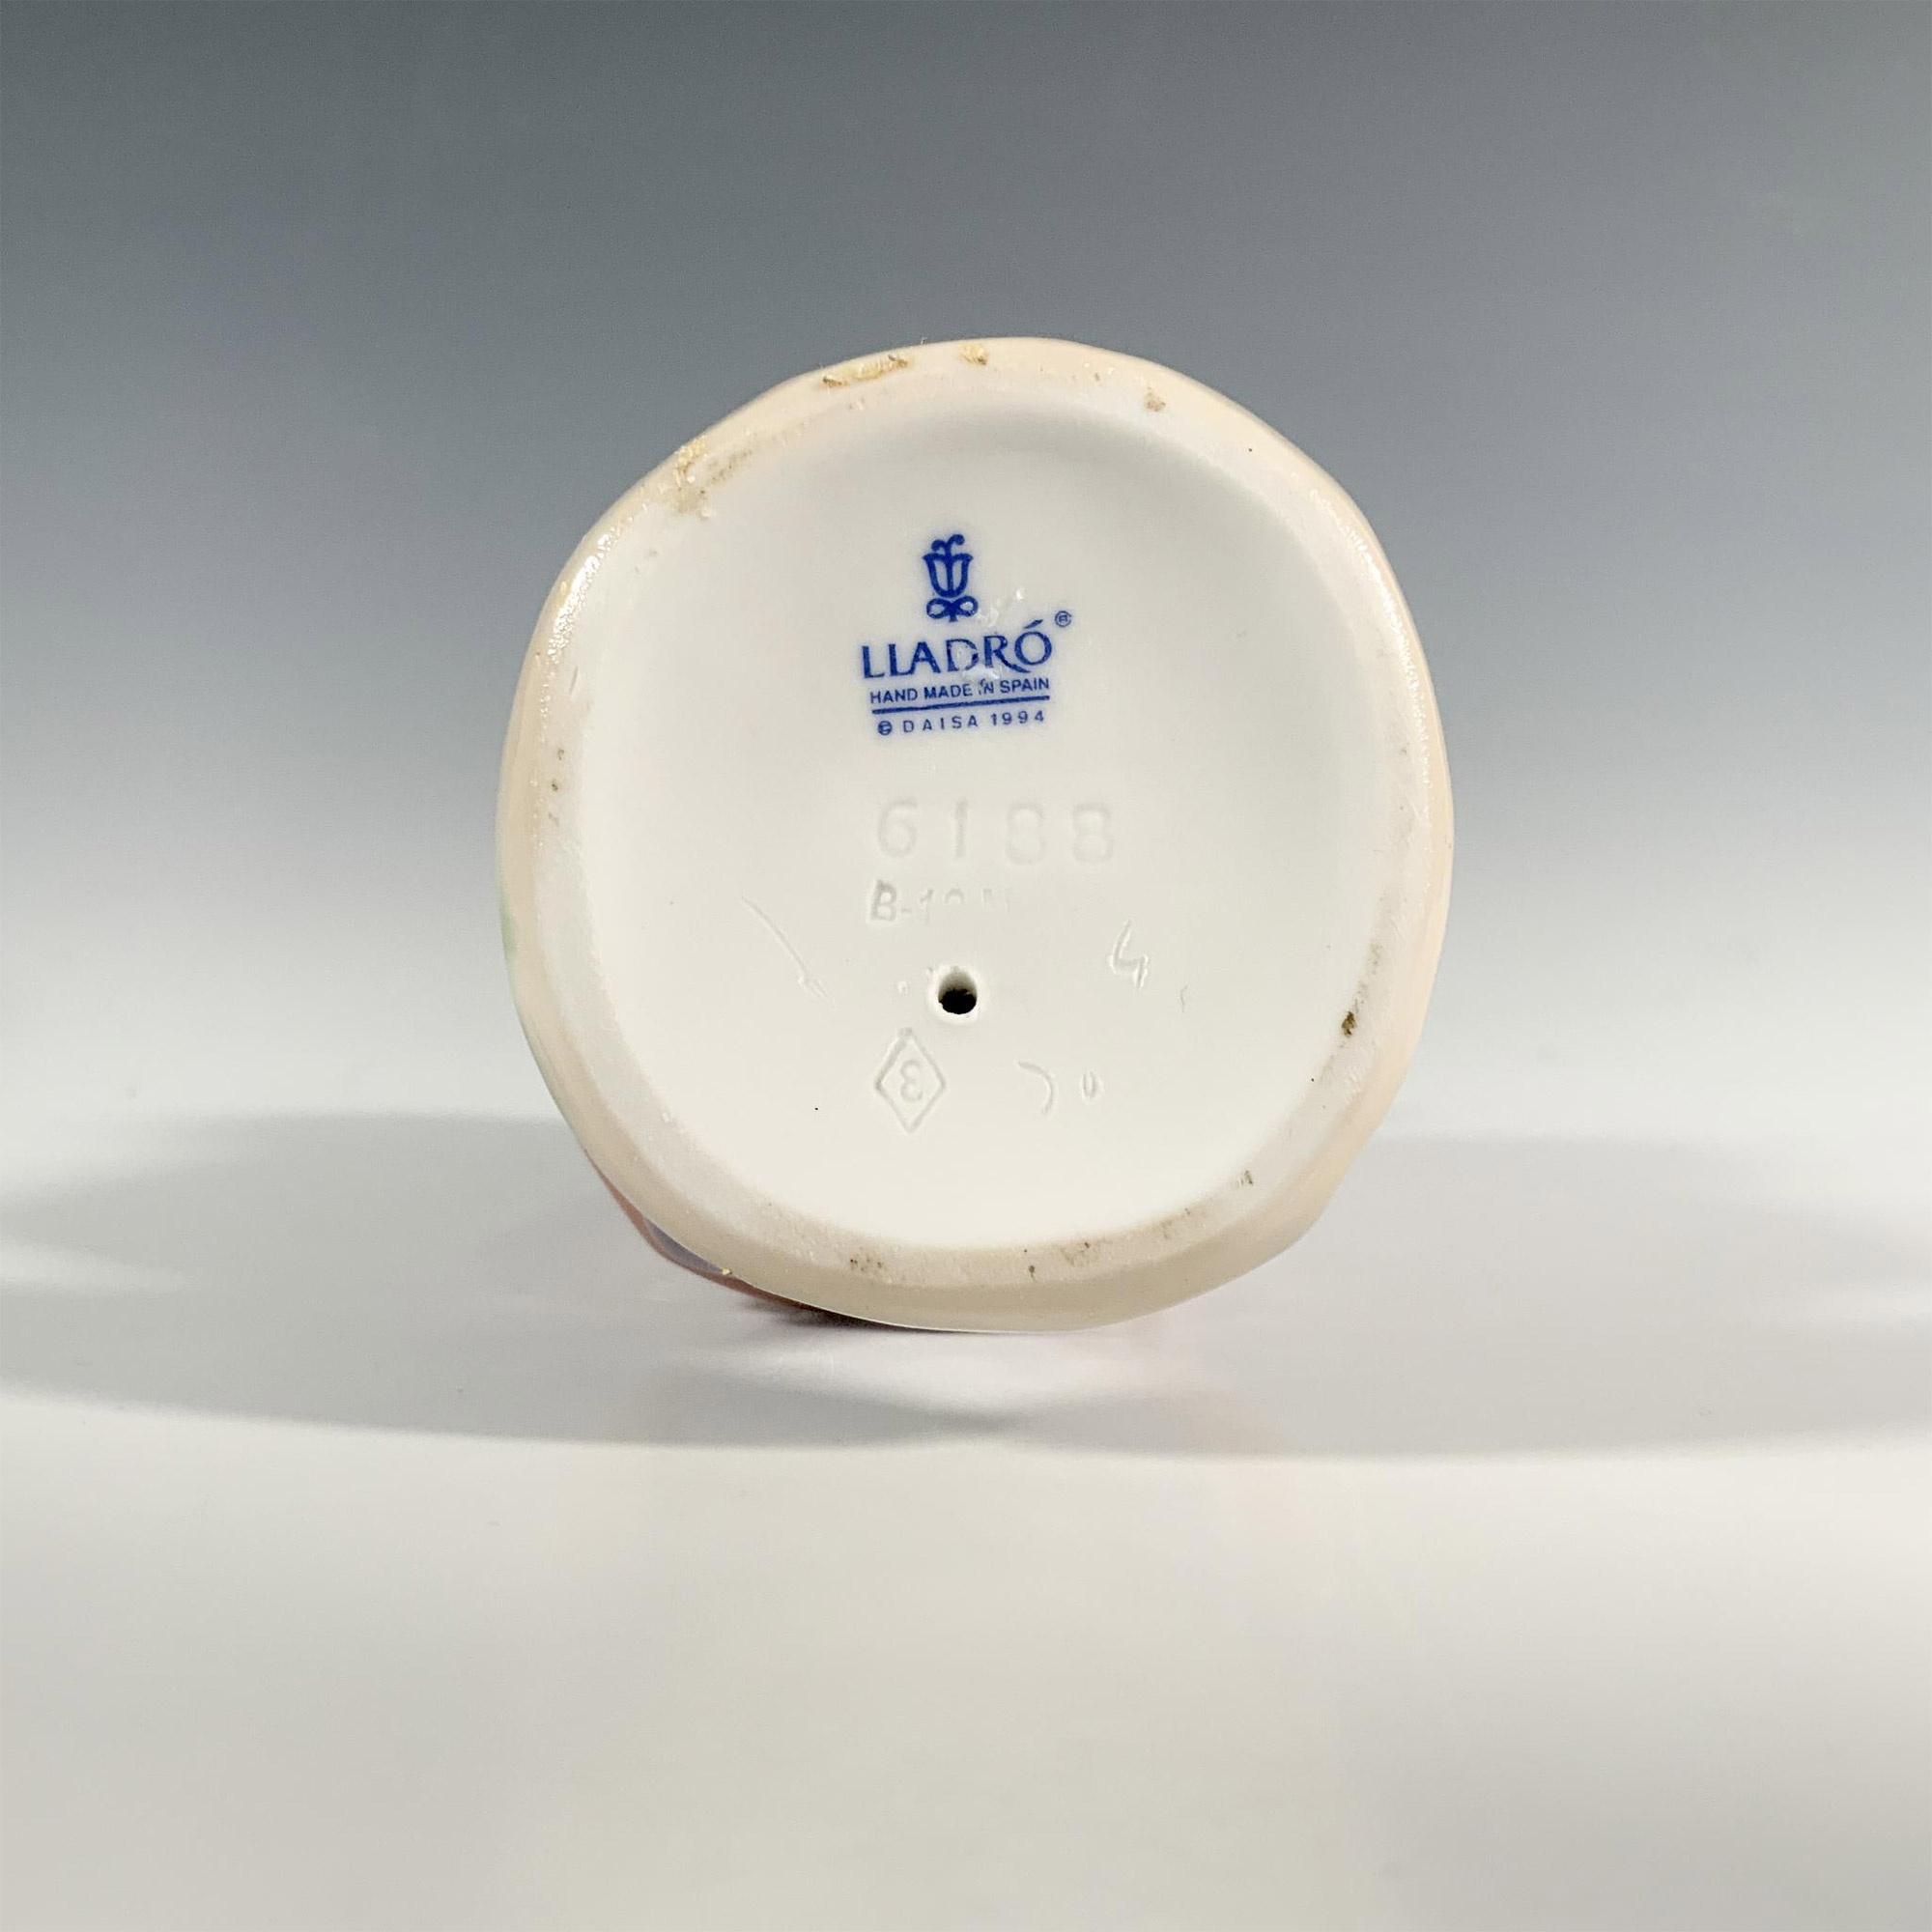 Asian Boy 1006188 - Lladro Porcelain Figurine - Image 3 of 4